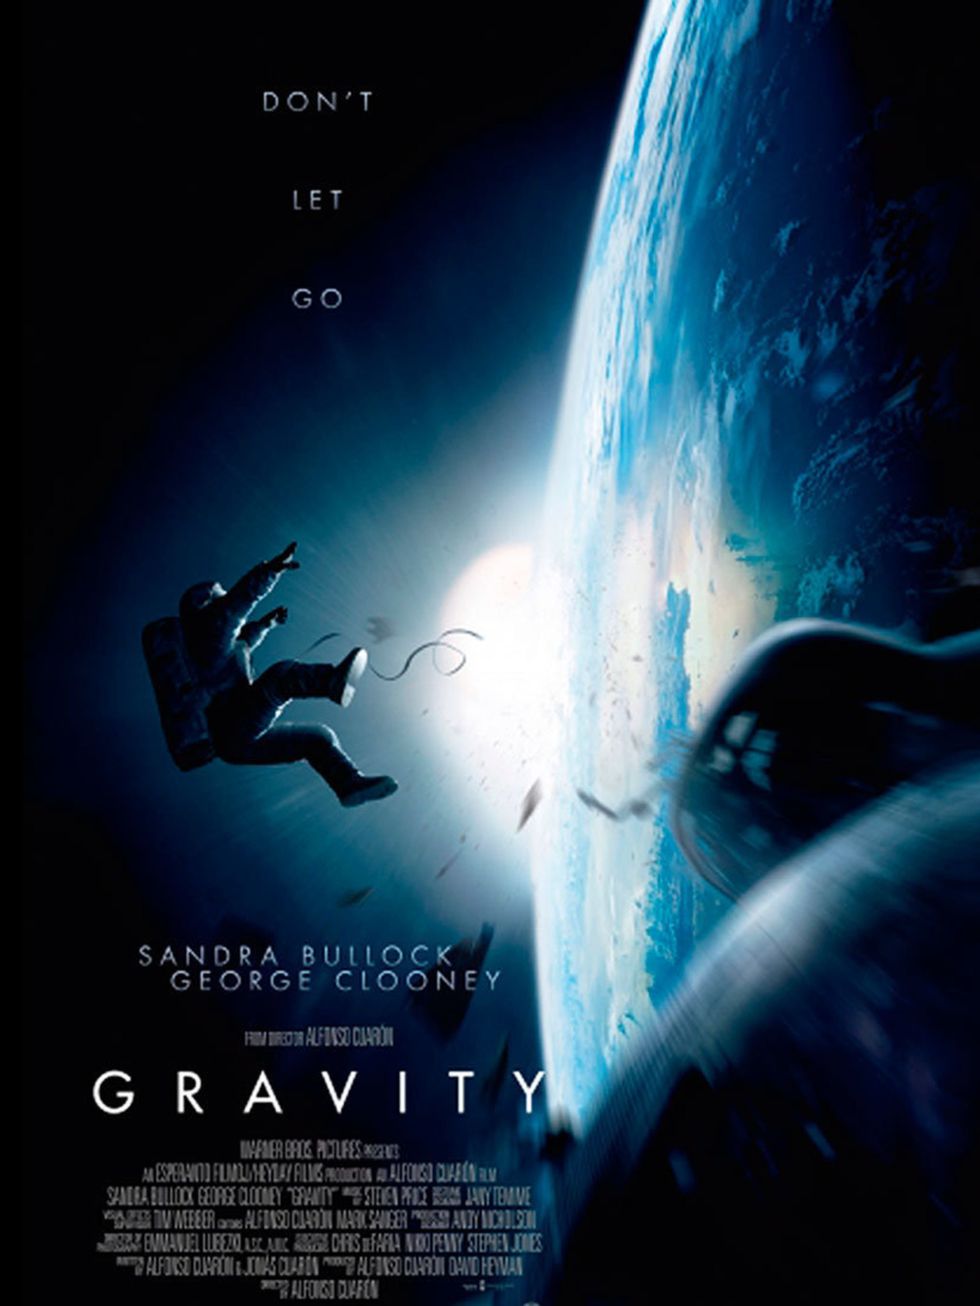 <p><strong>Gravity</strong></p><p>Sandra Bullock talks to men only  but she's a strong, complex heroine and the lead character. This fail highlights one of the Bechdel test's flaws: films with a tiny cast may not apply.</p><p>SCORE: 0/3</p><p><a href="ht